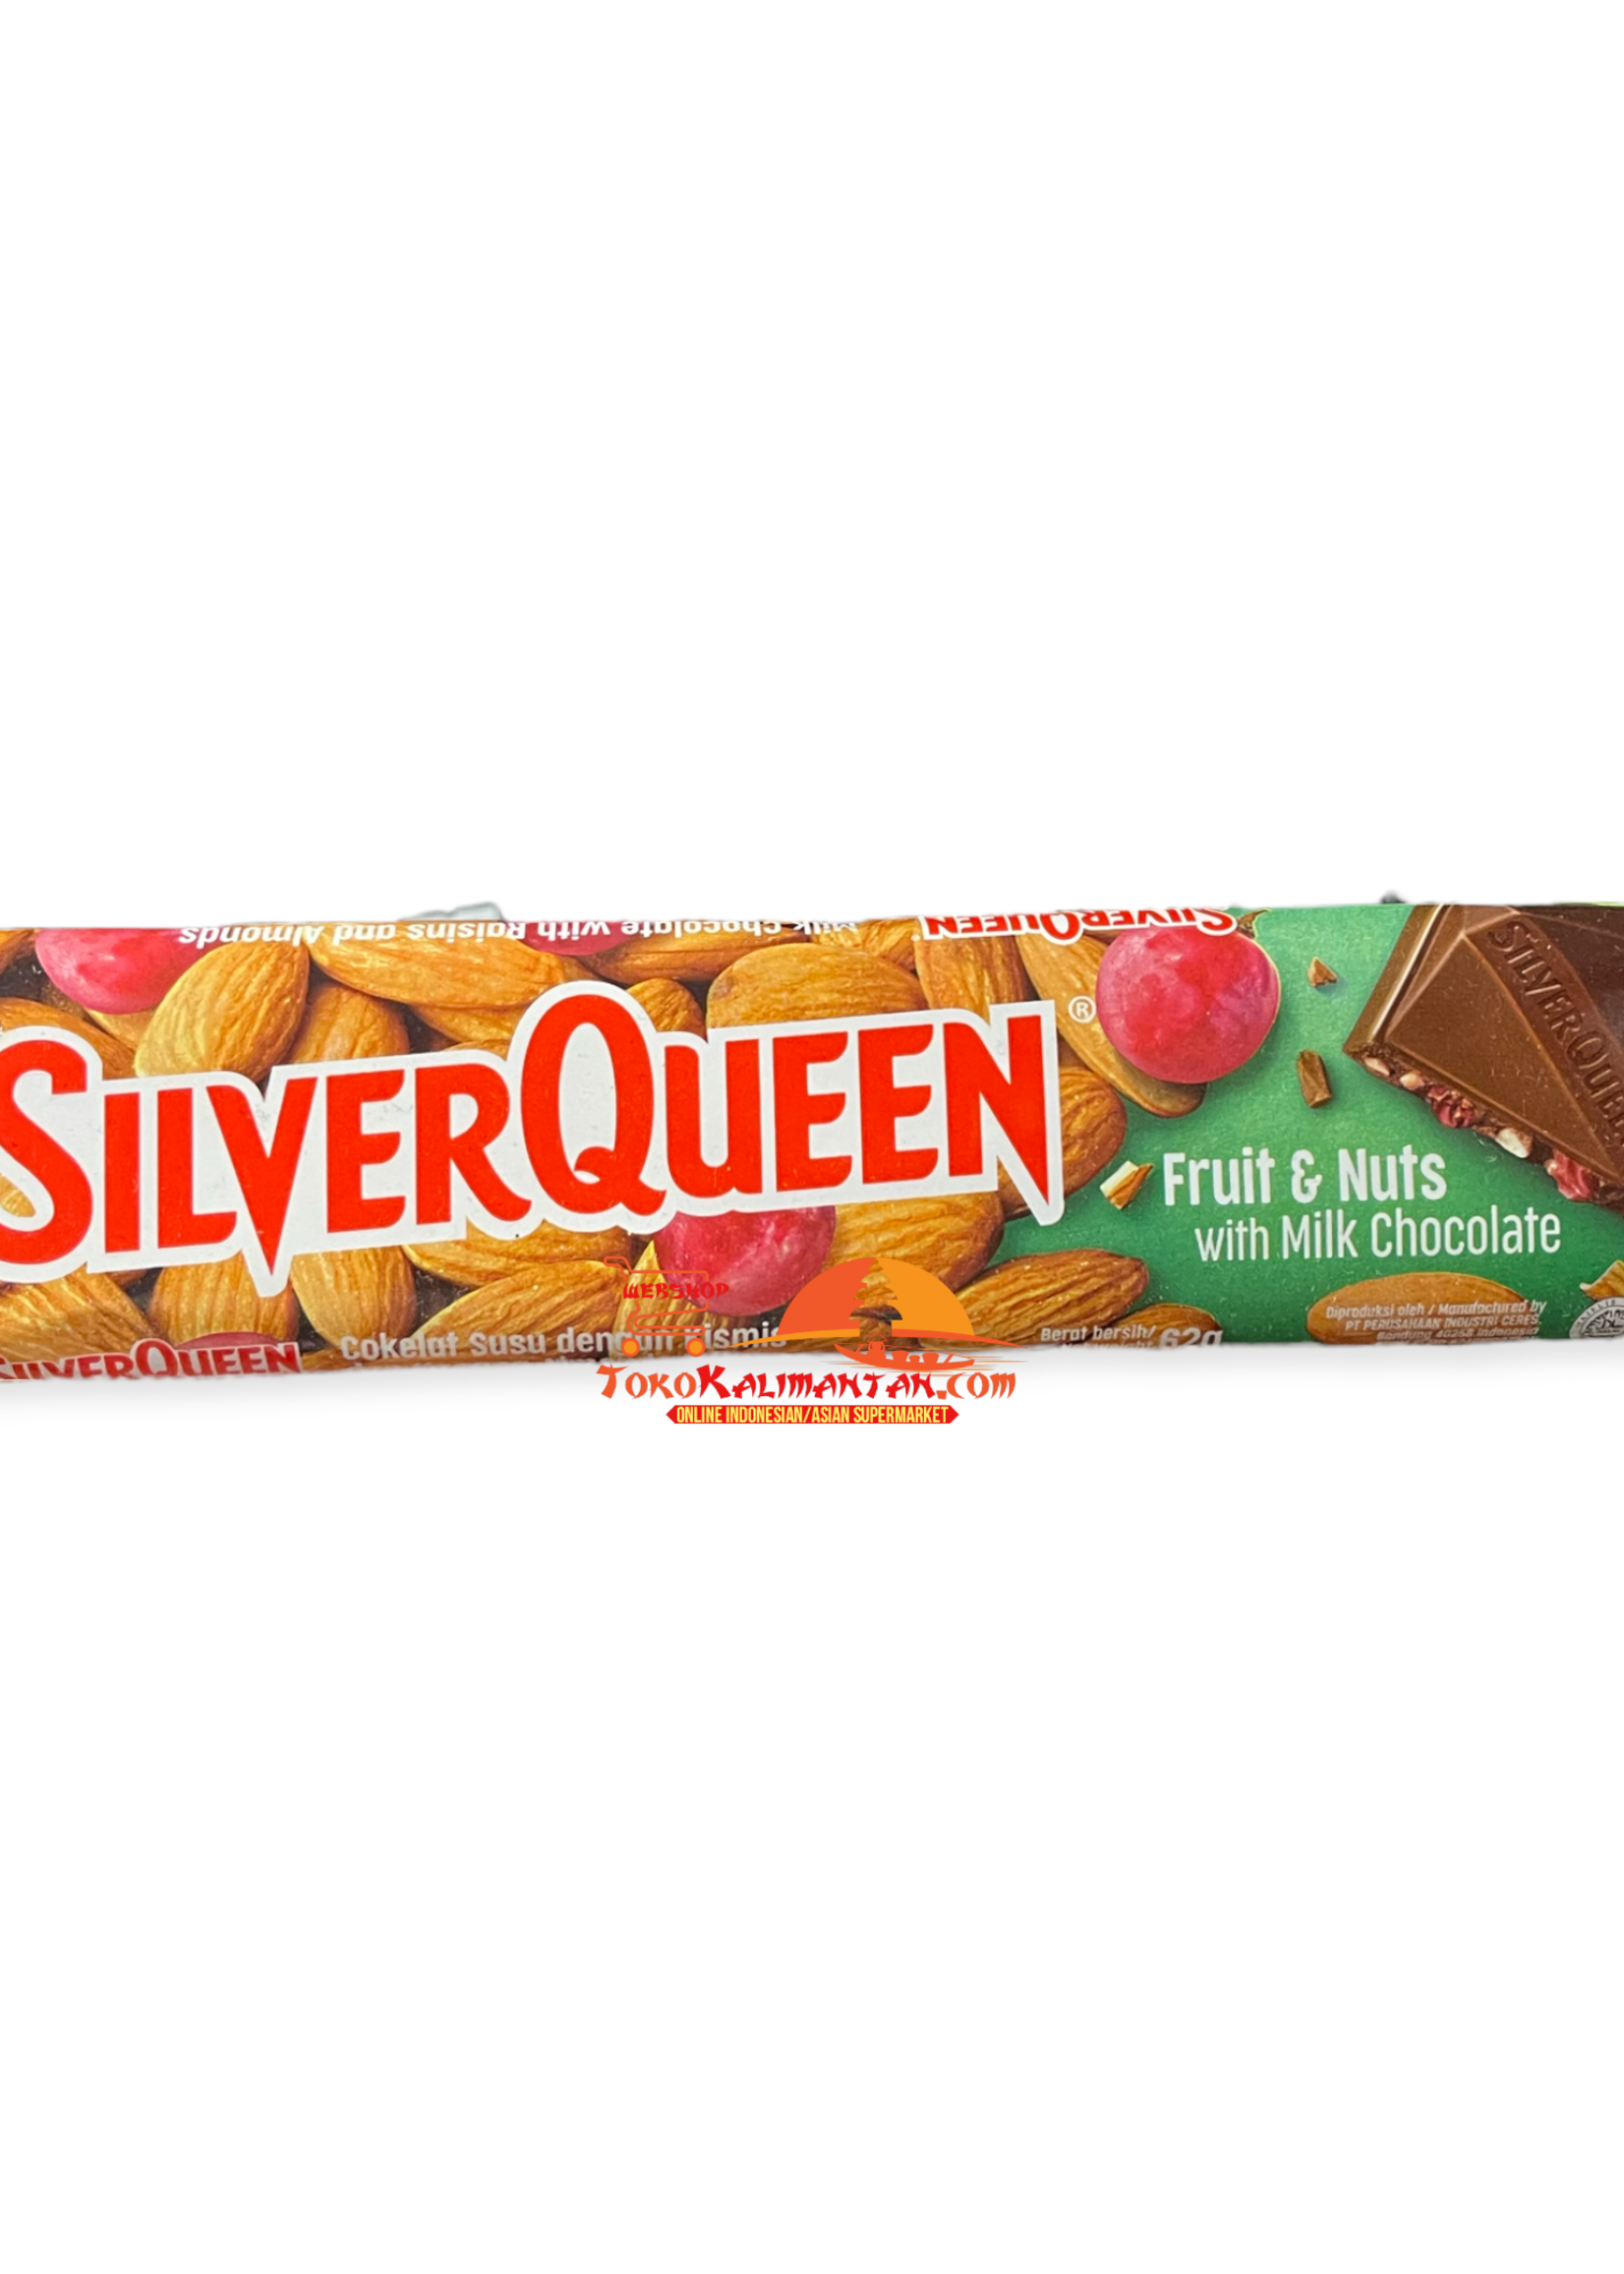 Silverqueen Silverqueen  fruit & nuts with milk Chocolate 62 gram